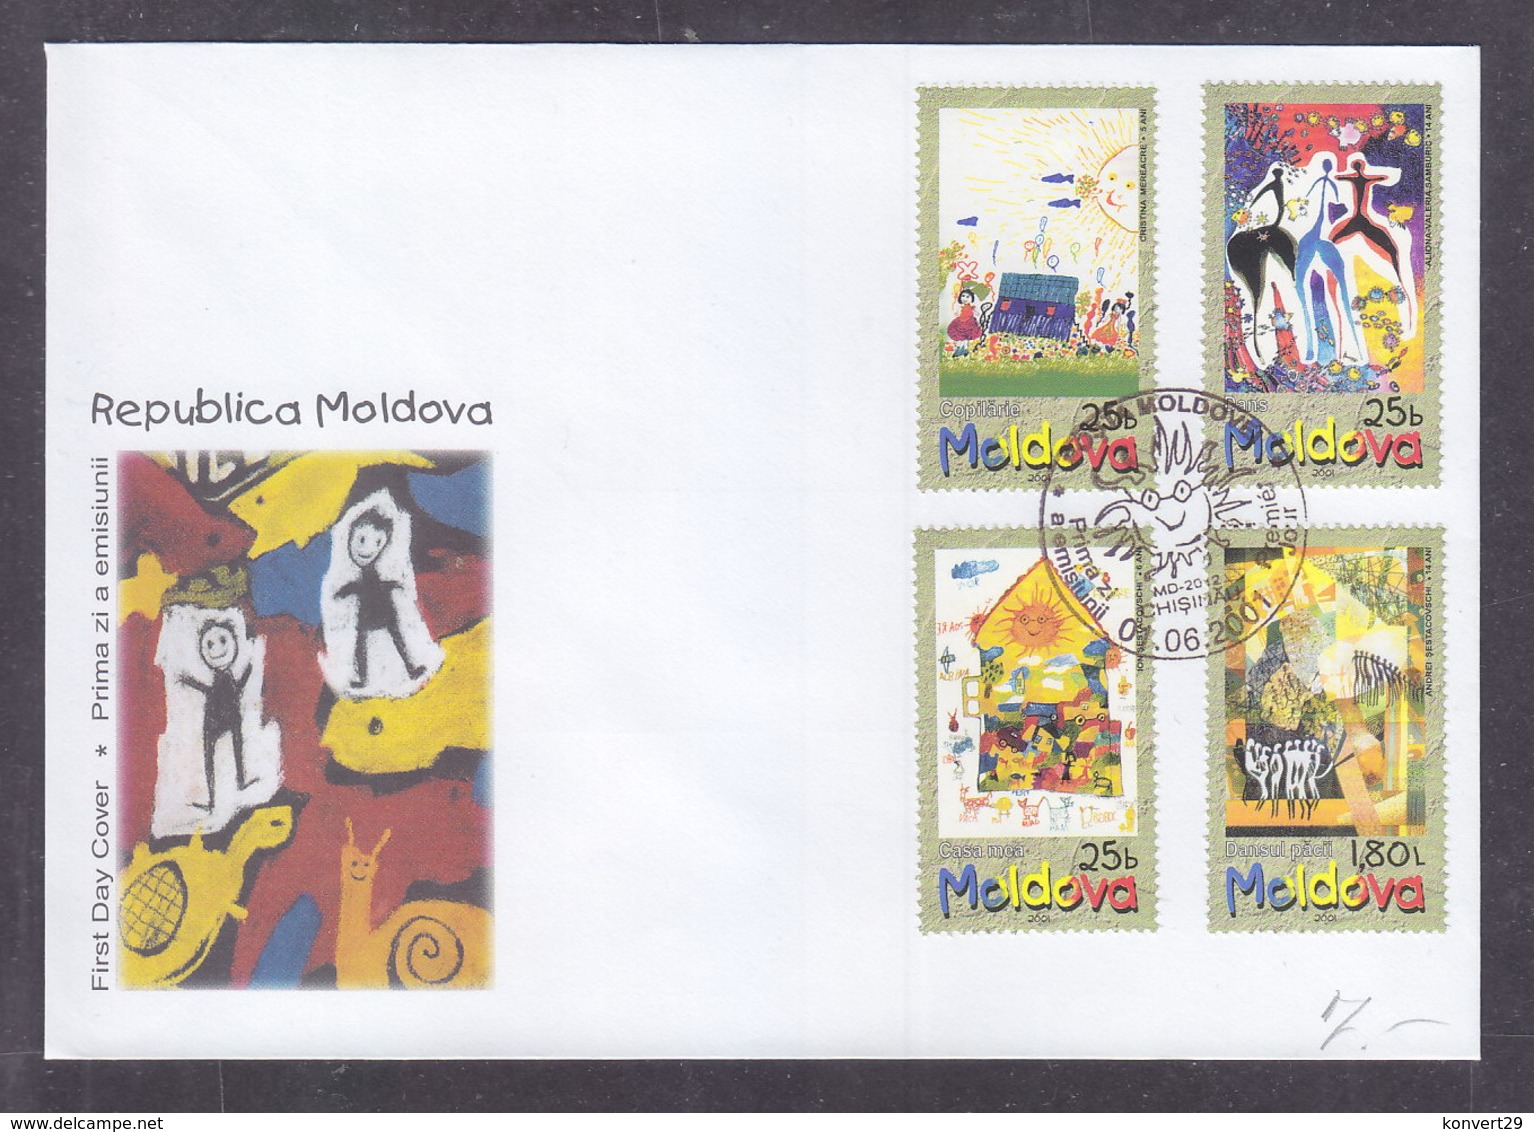 Moldova 2001 International Day Of The Child FDC - Moldavia